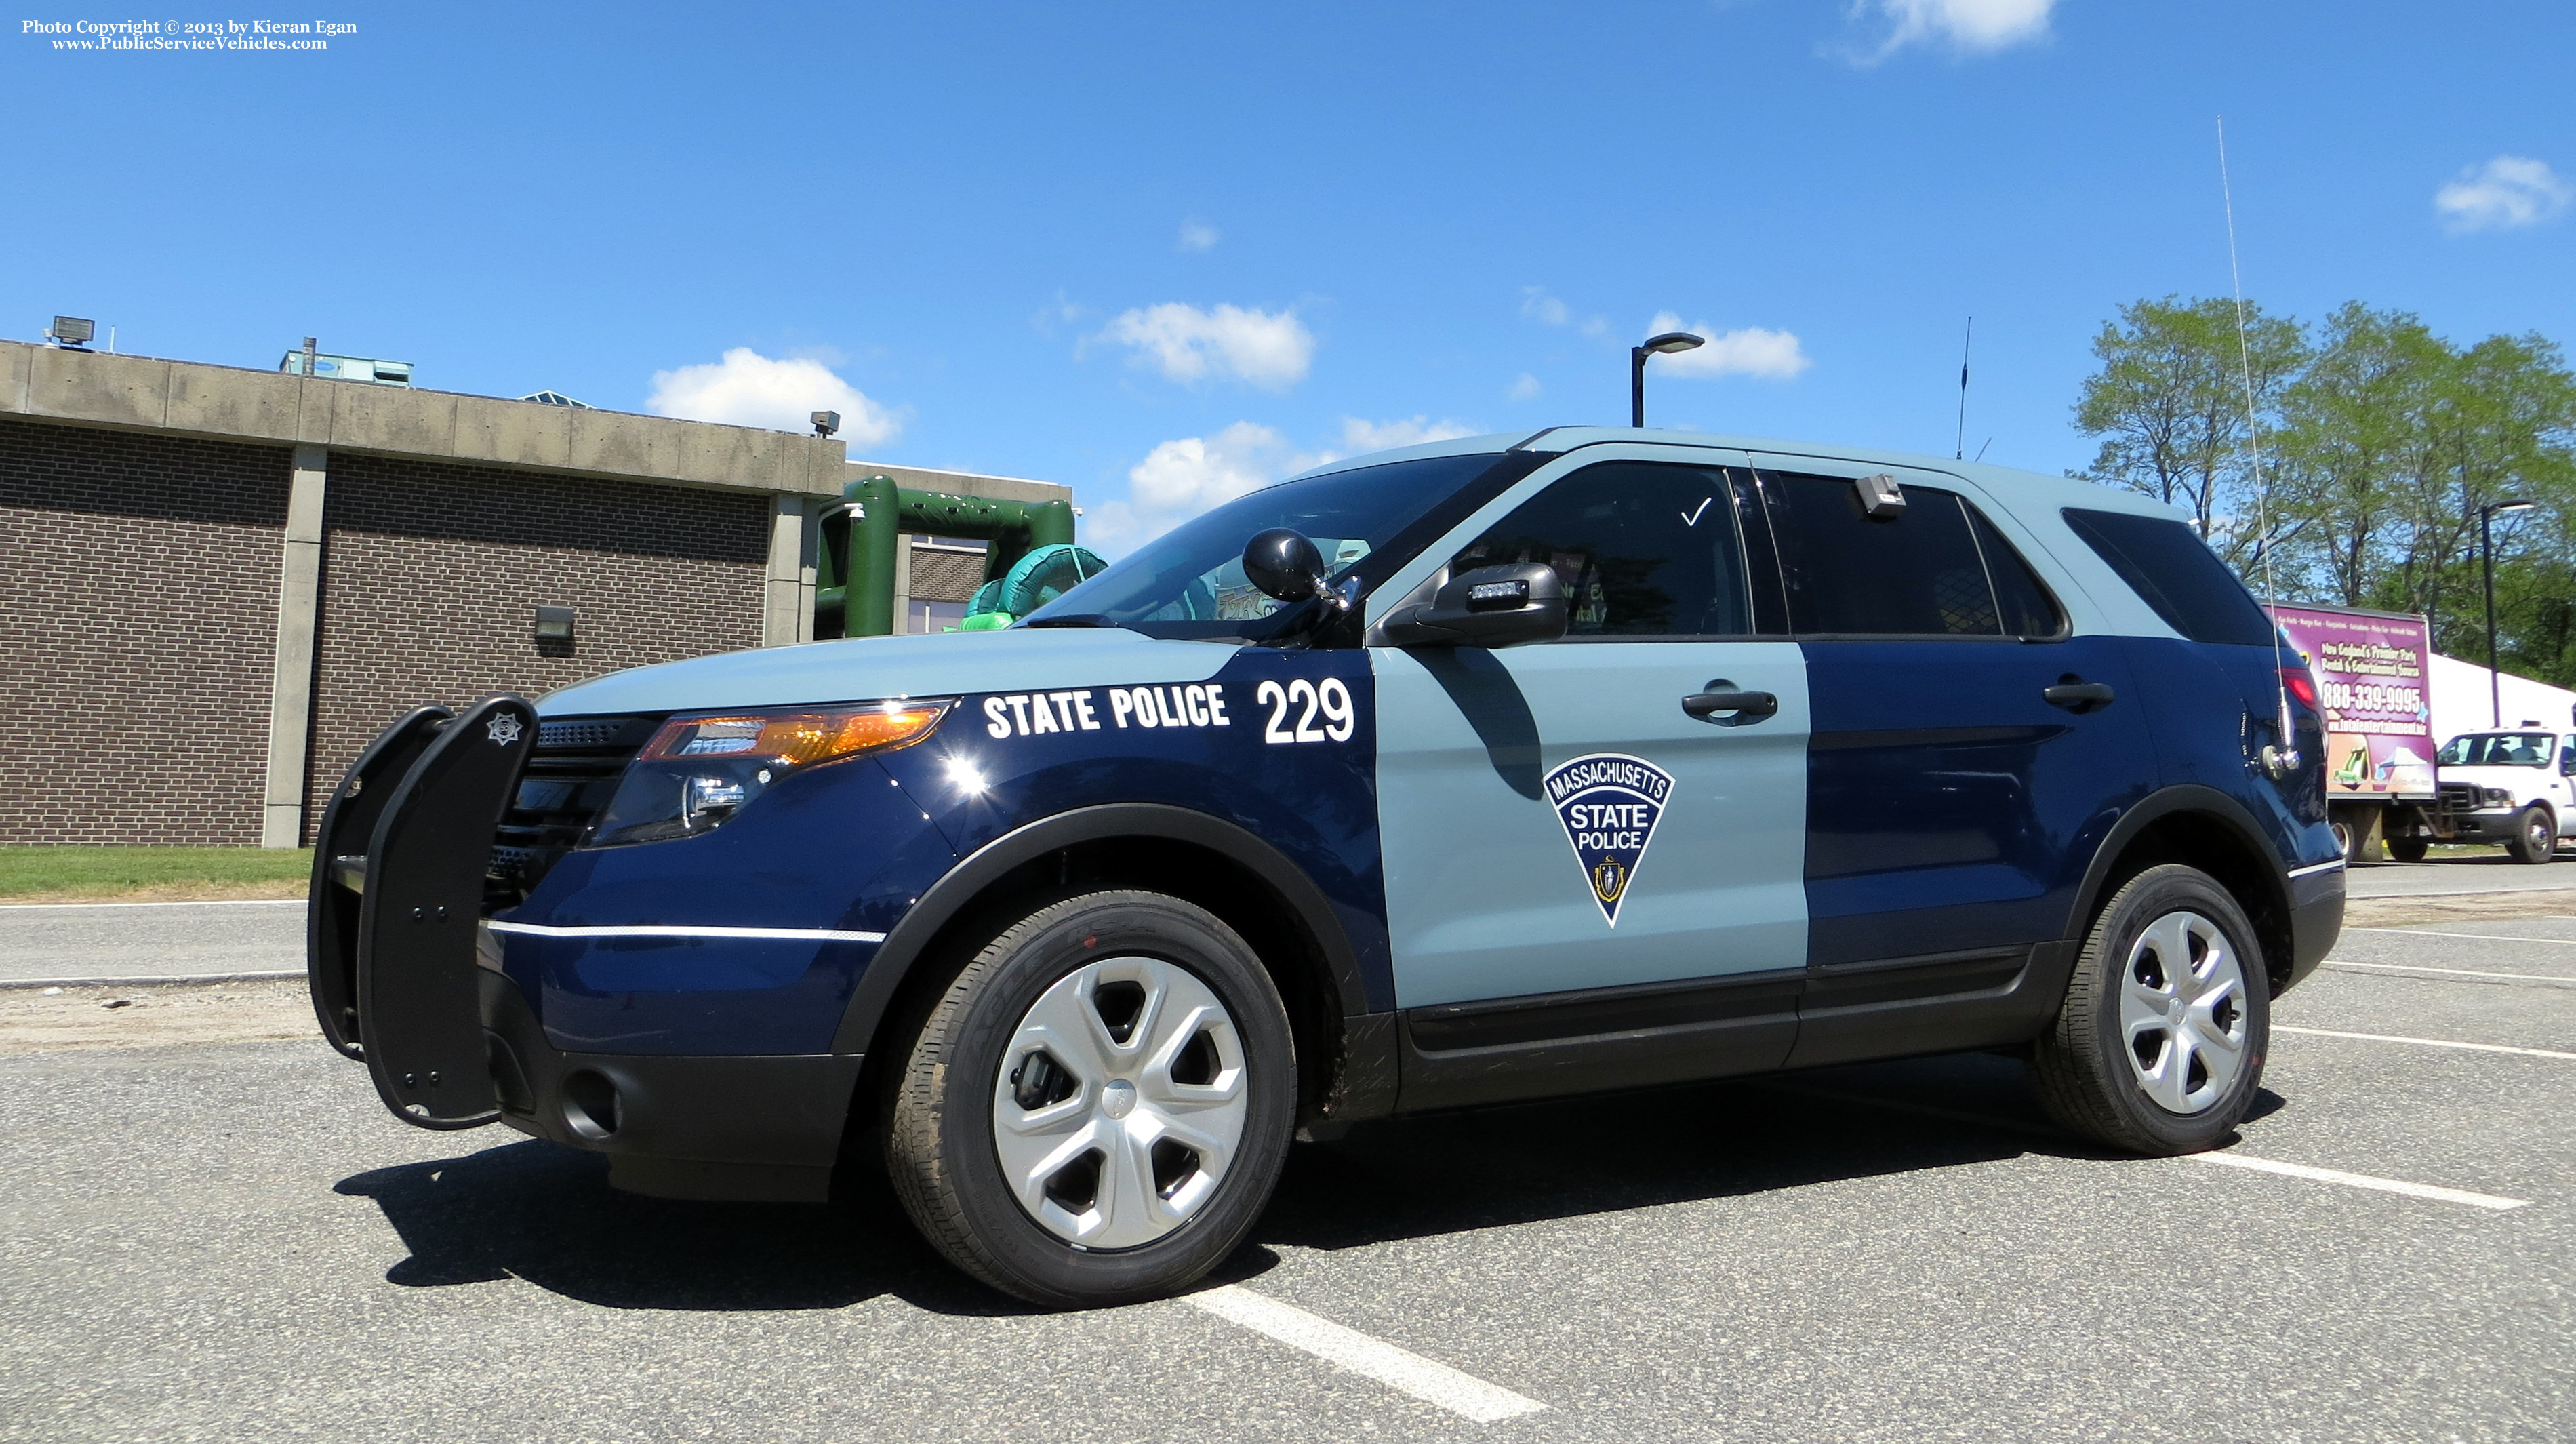 A photo  of Massachusetts State Police
            Cruiser 229, a 2013 Ford Police Interceptor Utility             taken by Kieran Egan